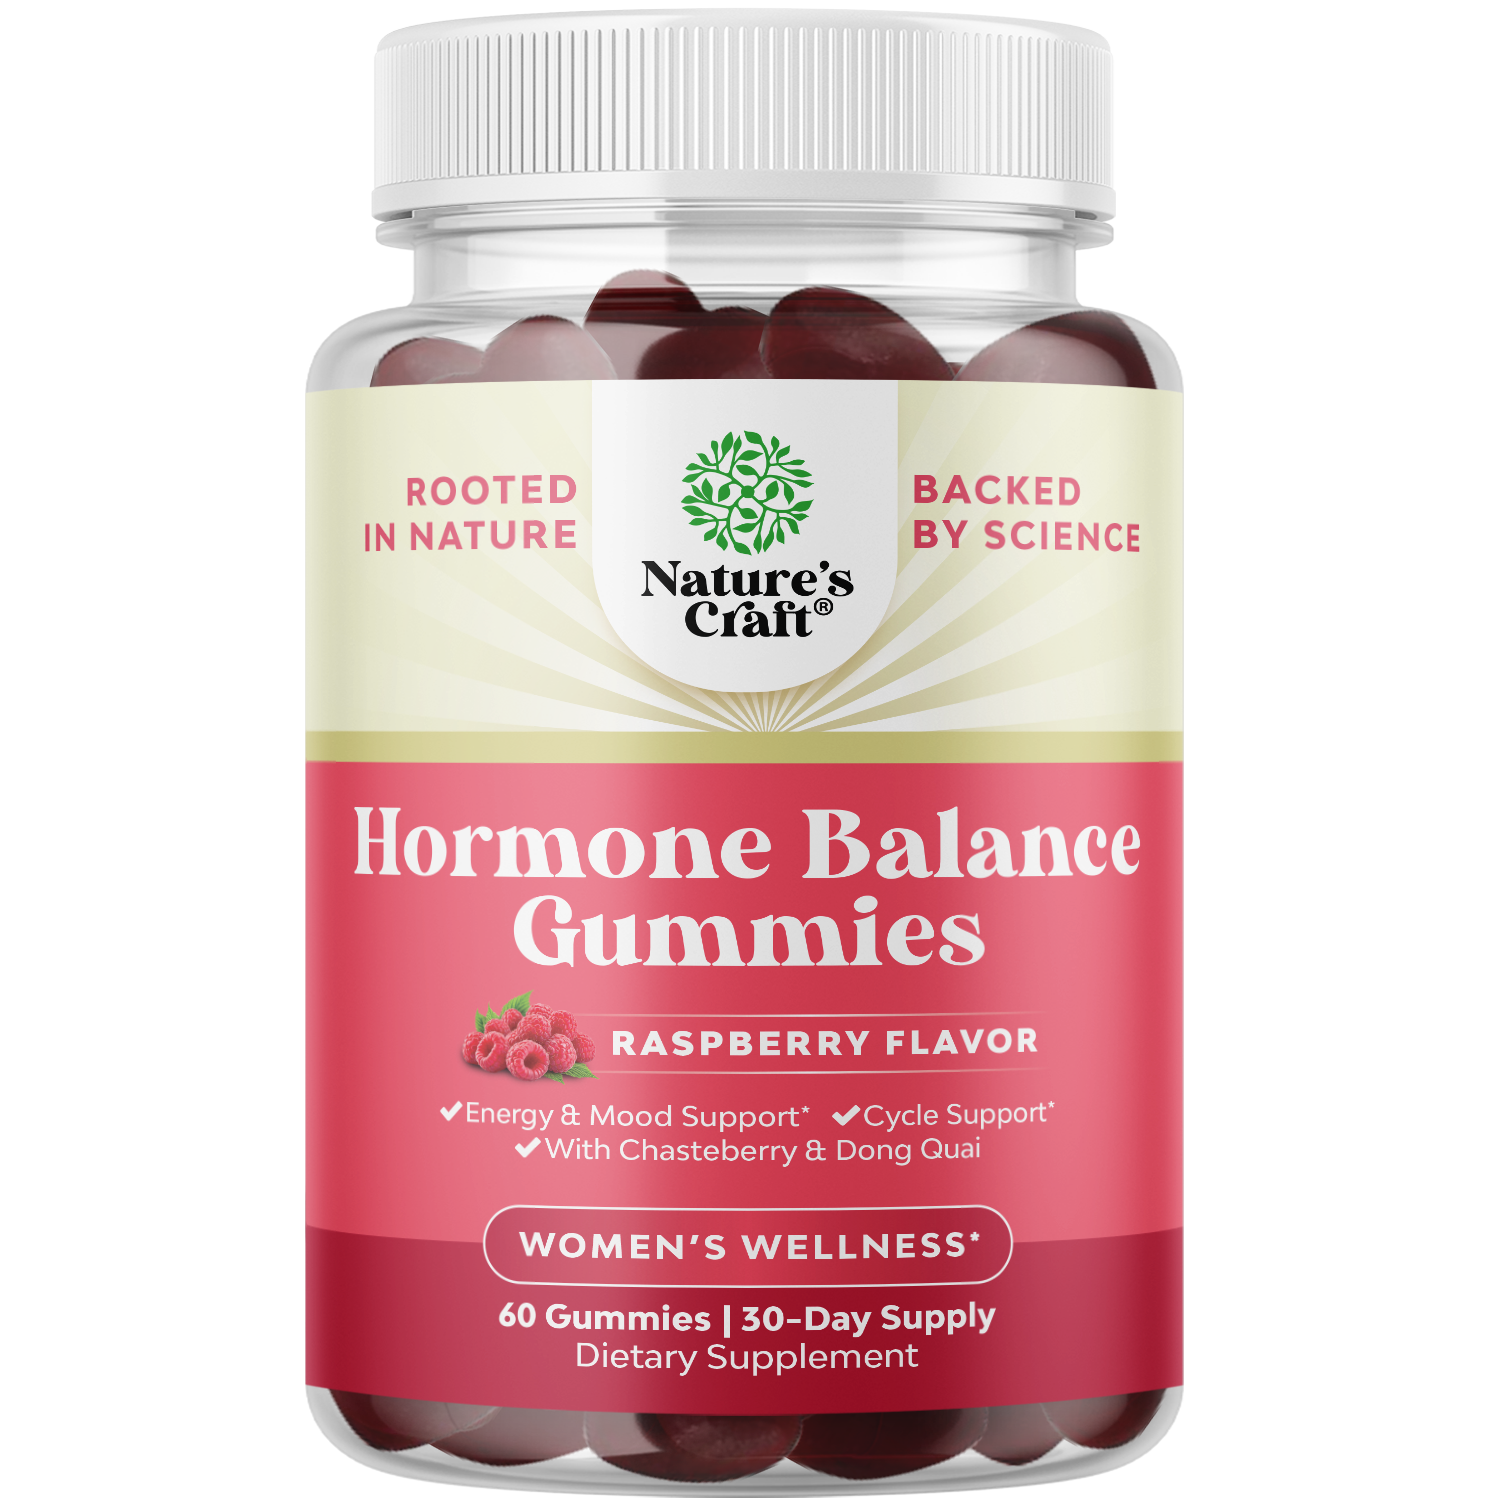 Hormone Balance Gummies - 60 Gummies